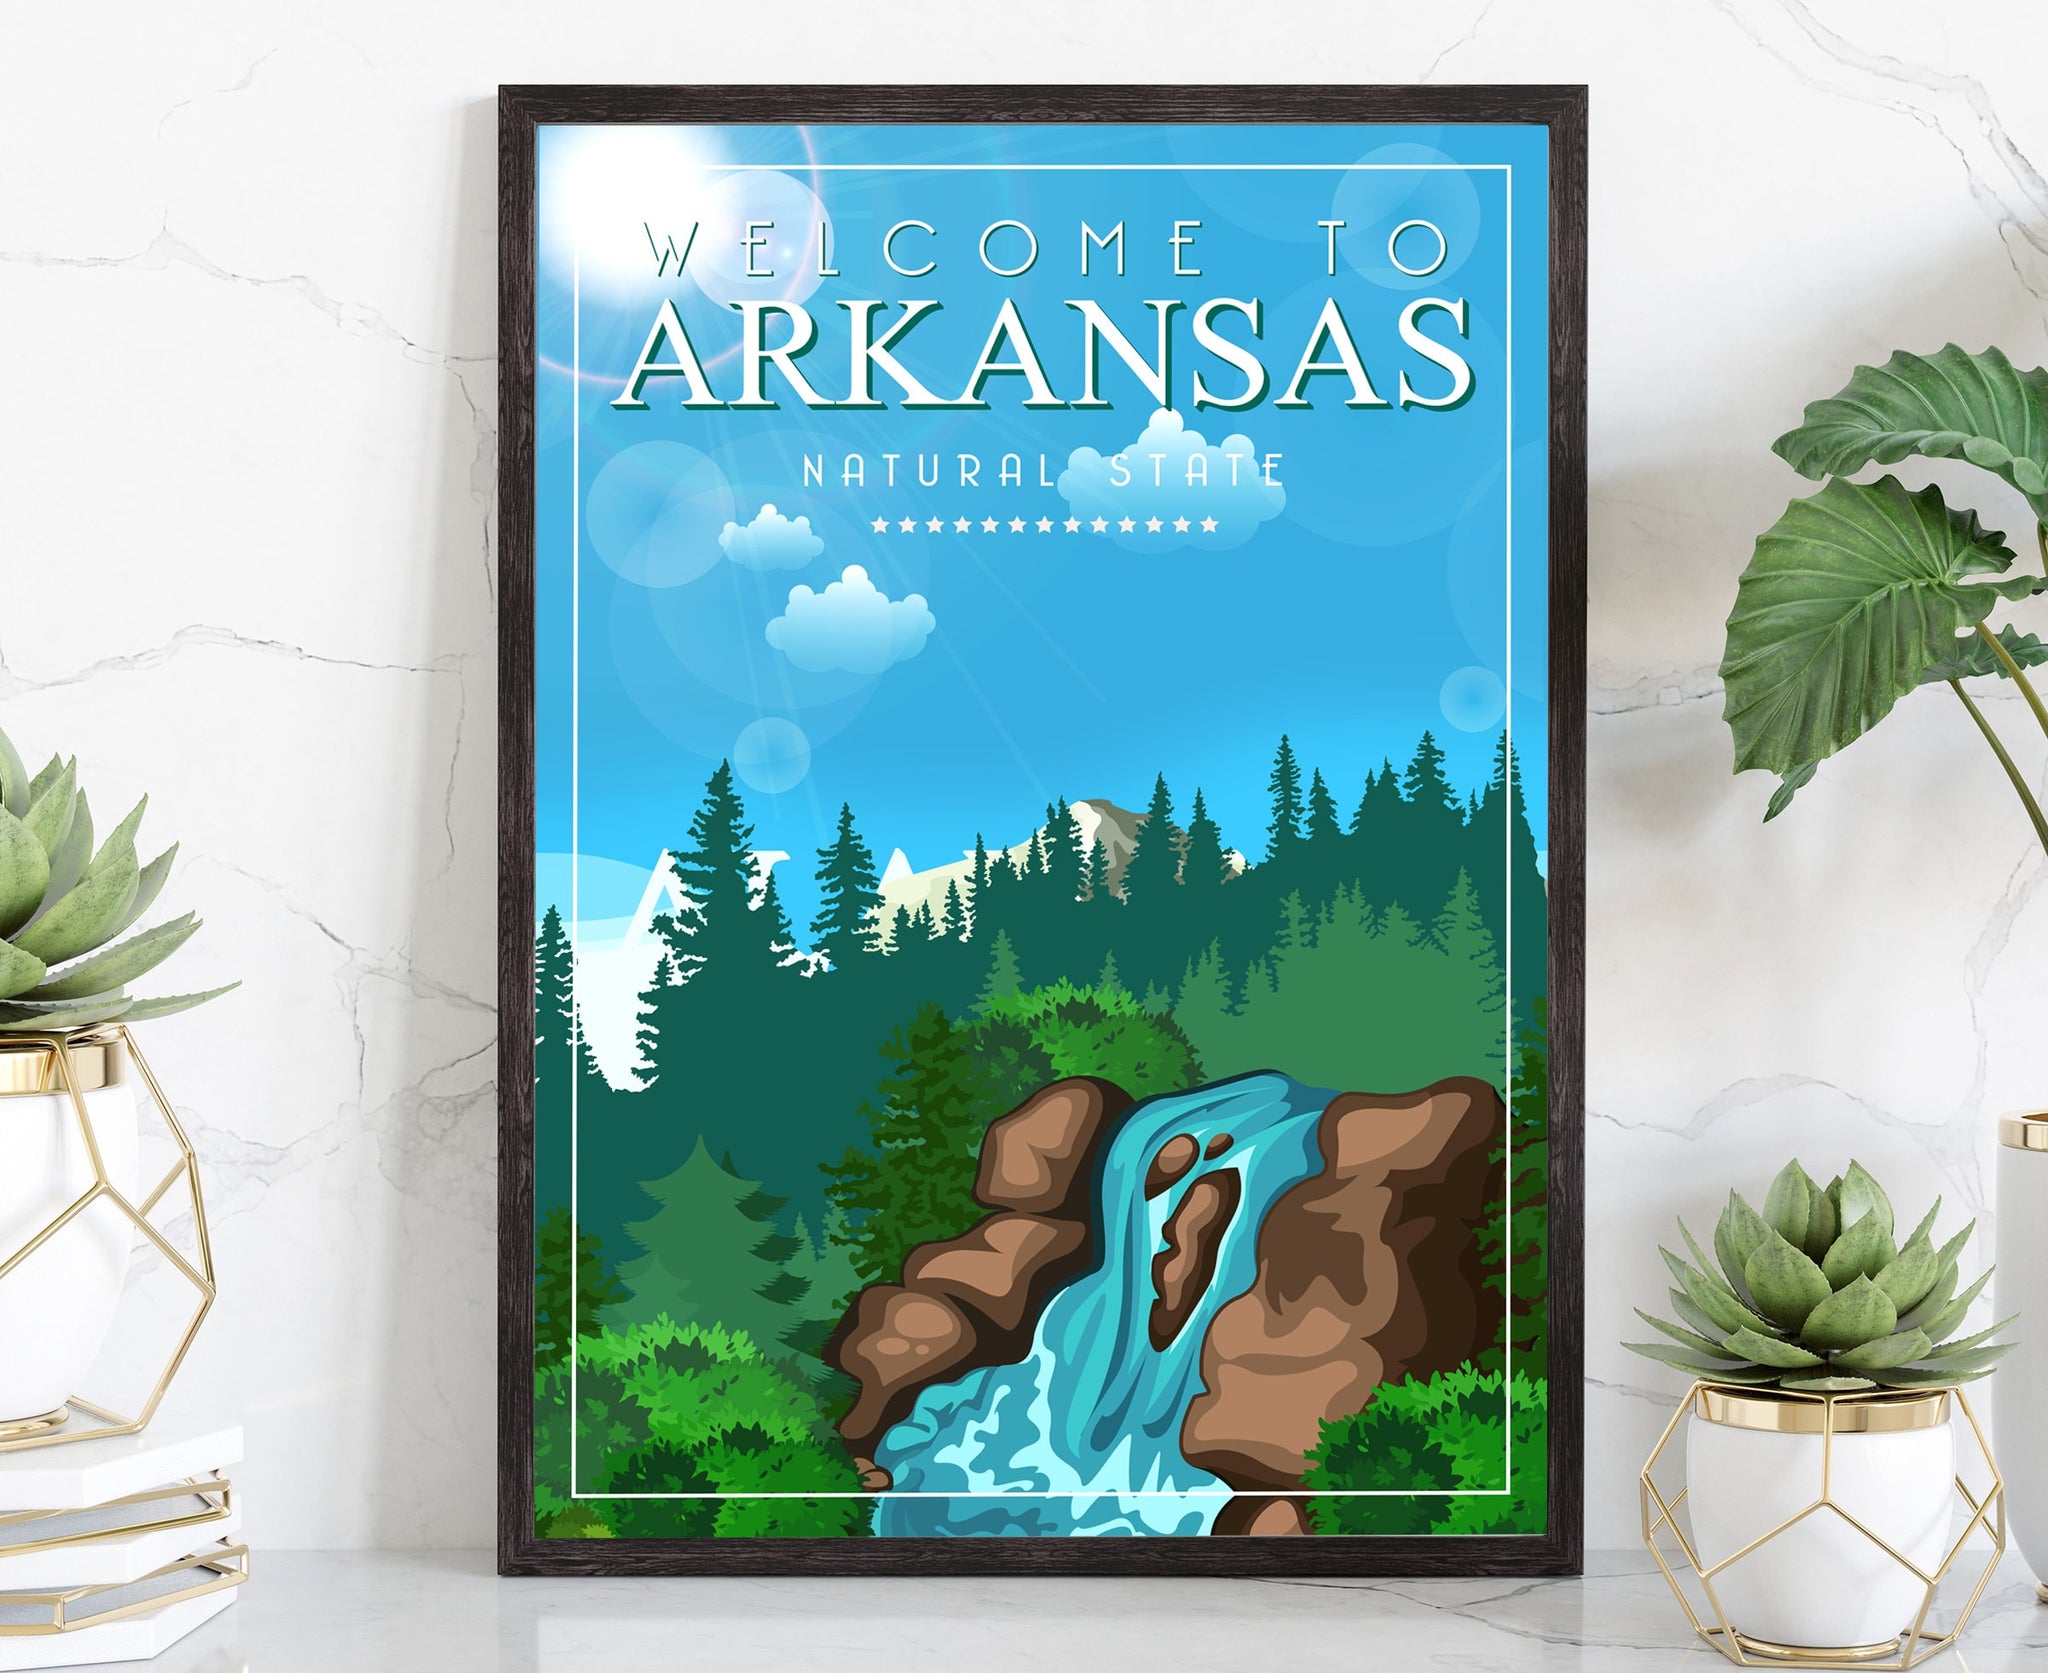 Arkansas Vintage Rustic Poster Print